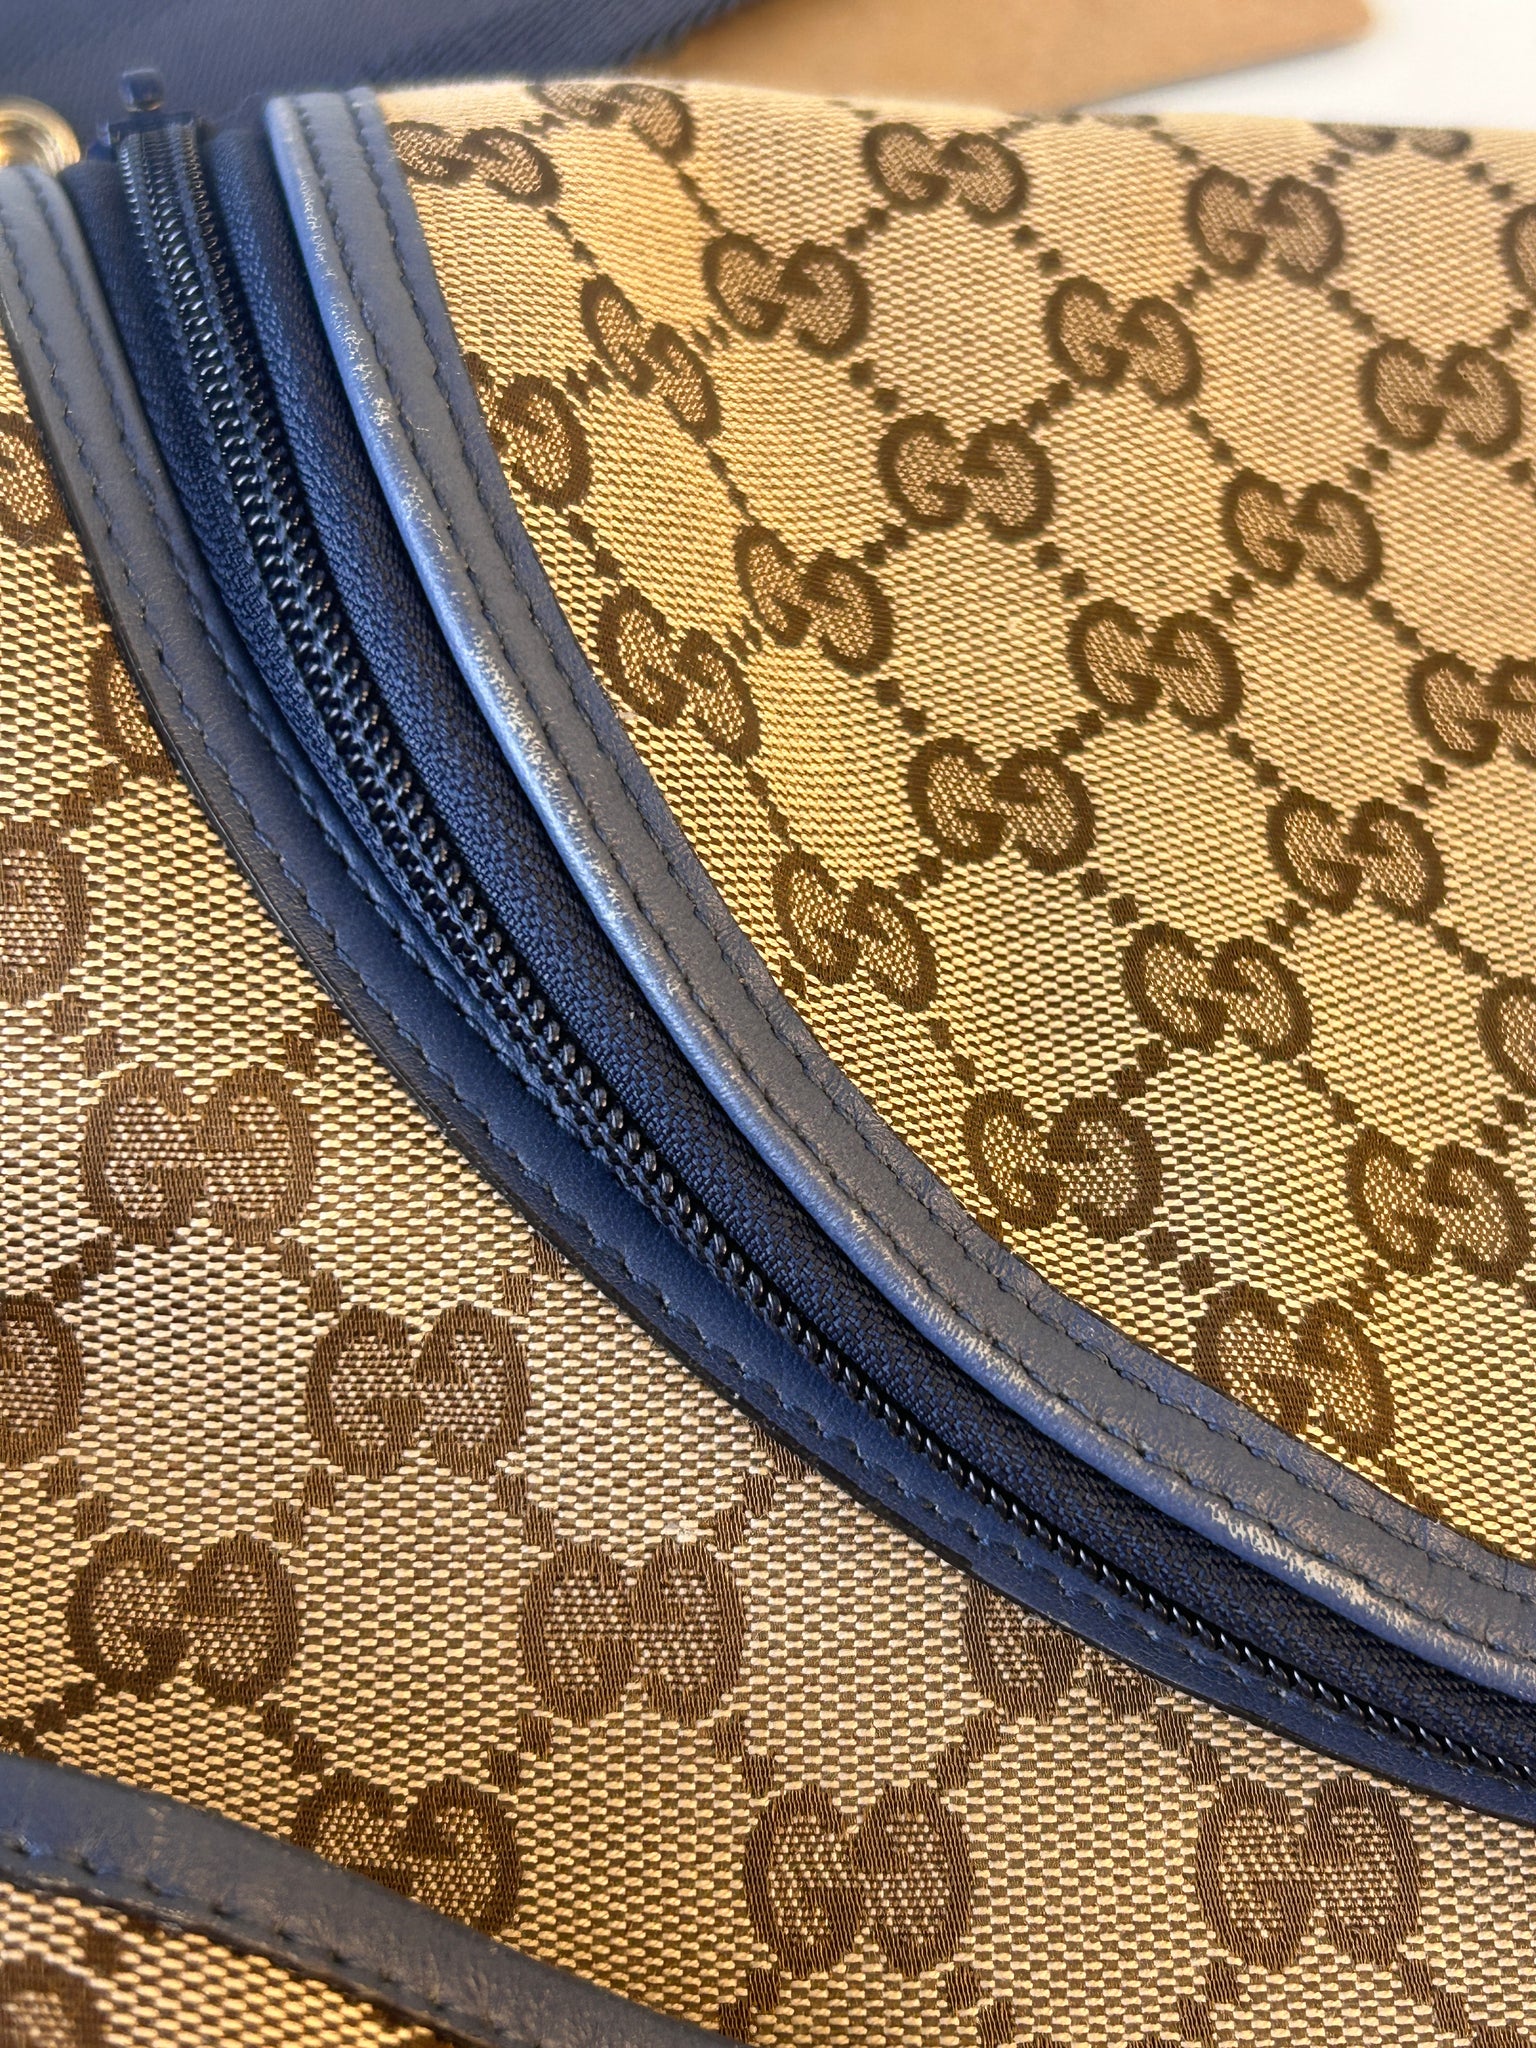 Preloved Gucci GG Supreme Canvas and Blue Leather Diaper Bag 9VM6BKQ 041224 B